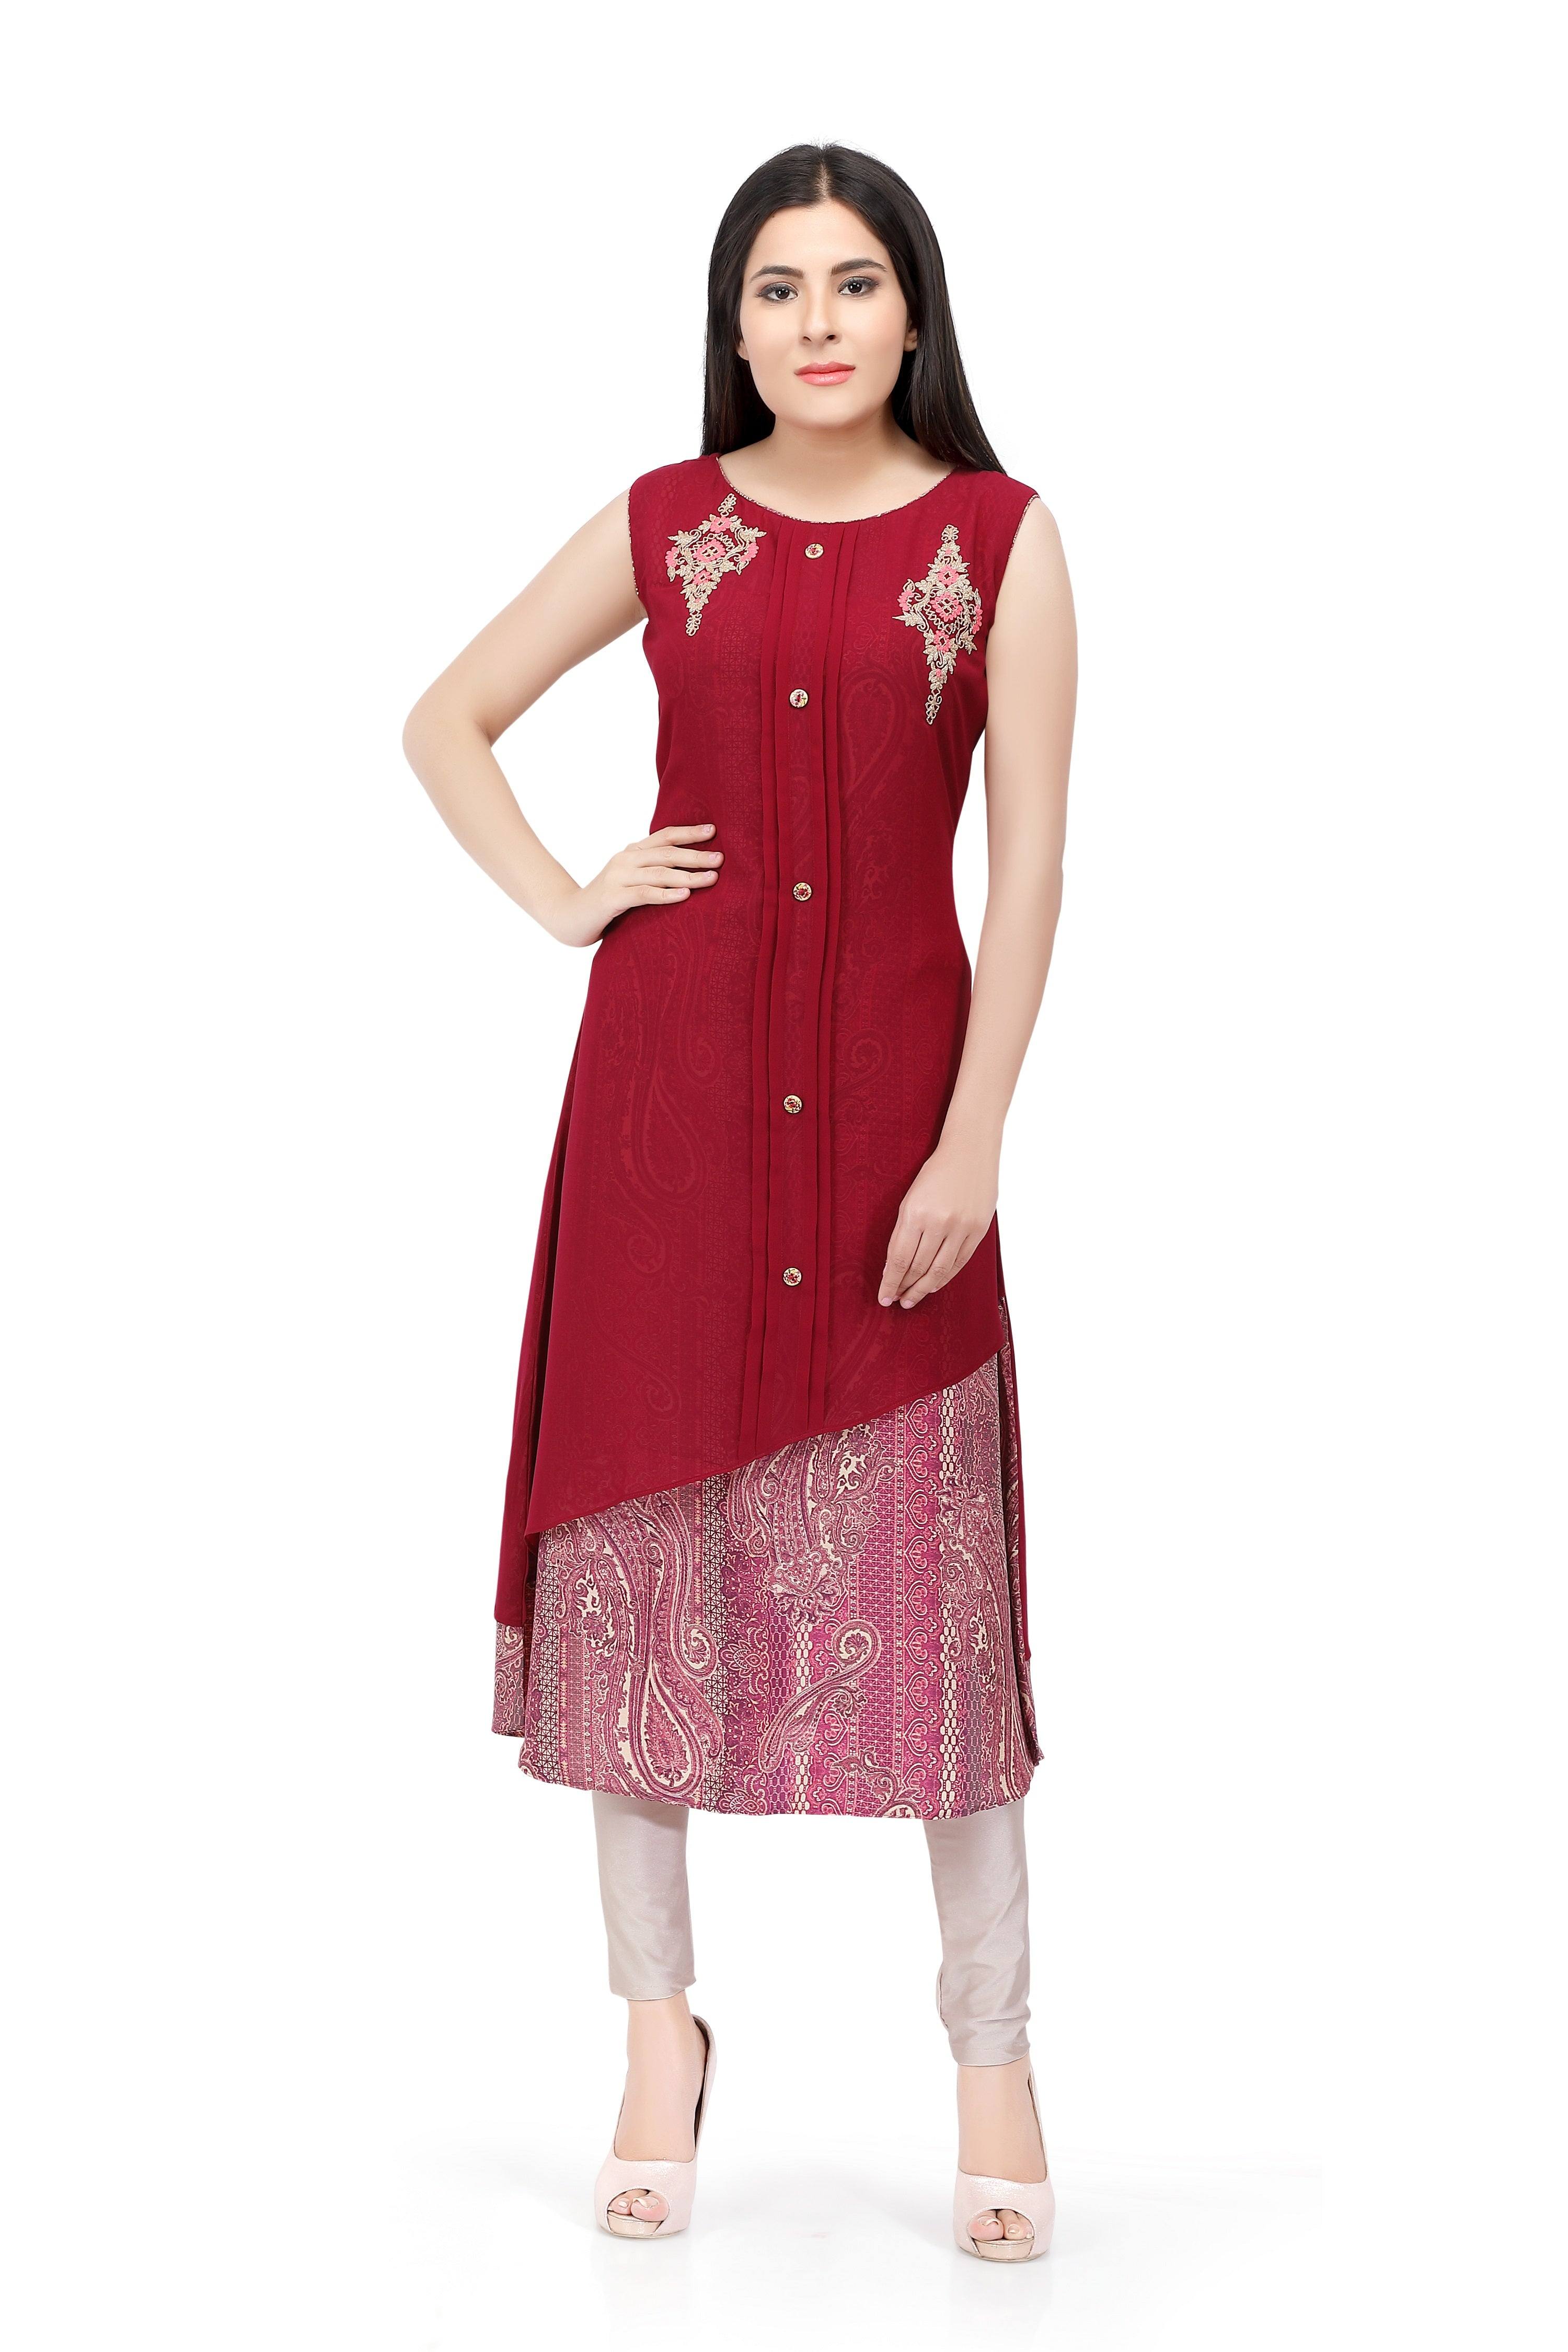 Kurti by Sabhyata | Dress neck designs, Clothes for women, Clothes